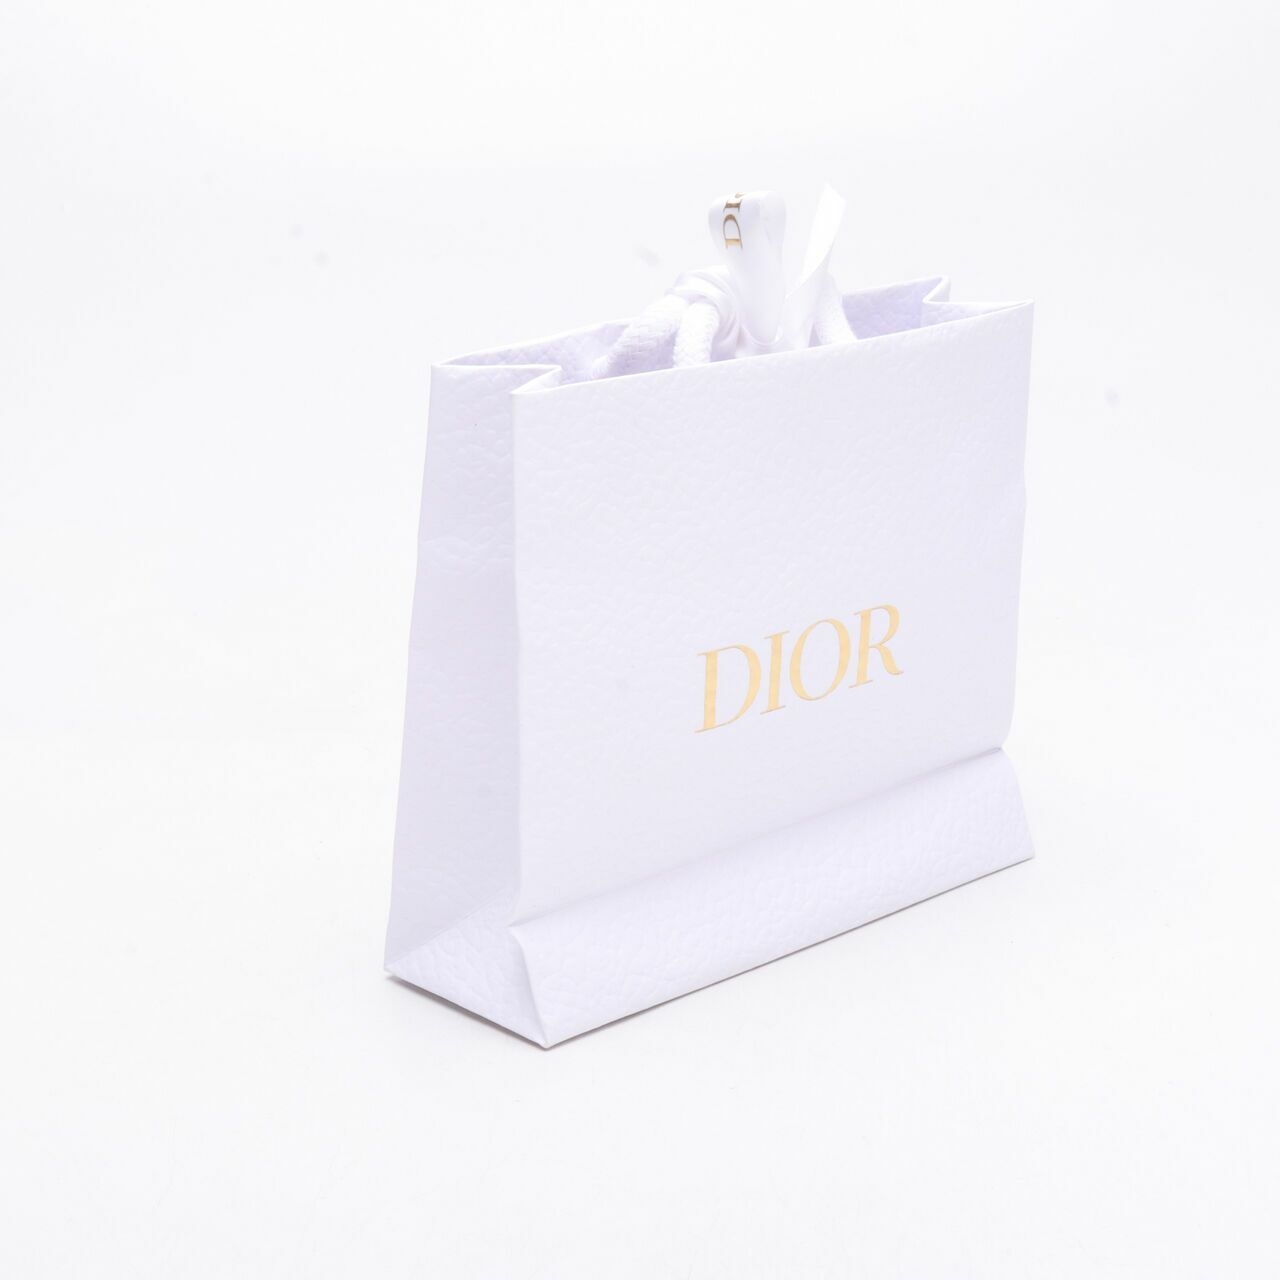 Dior Rogue Dior Couture Color Floral Lip Care Long Wear 720 Icone Lipstick 